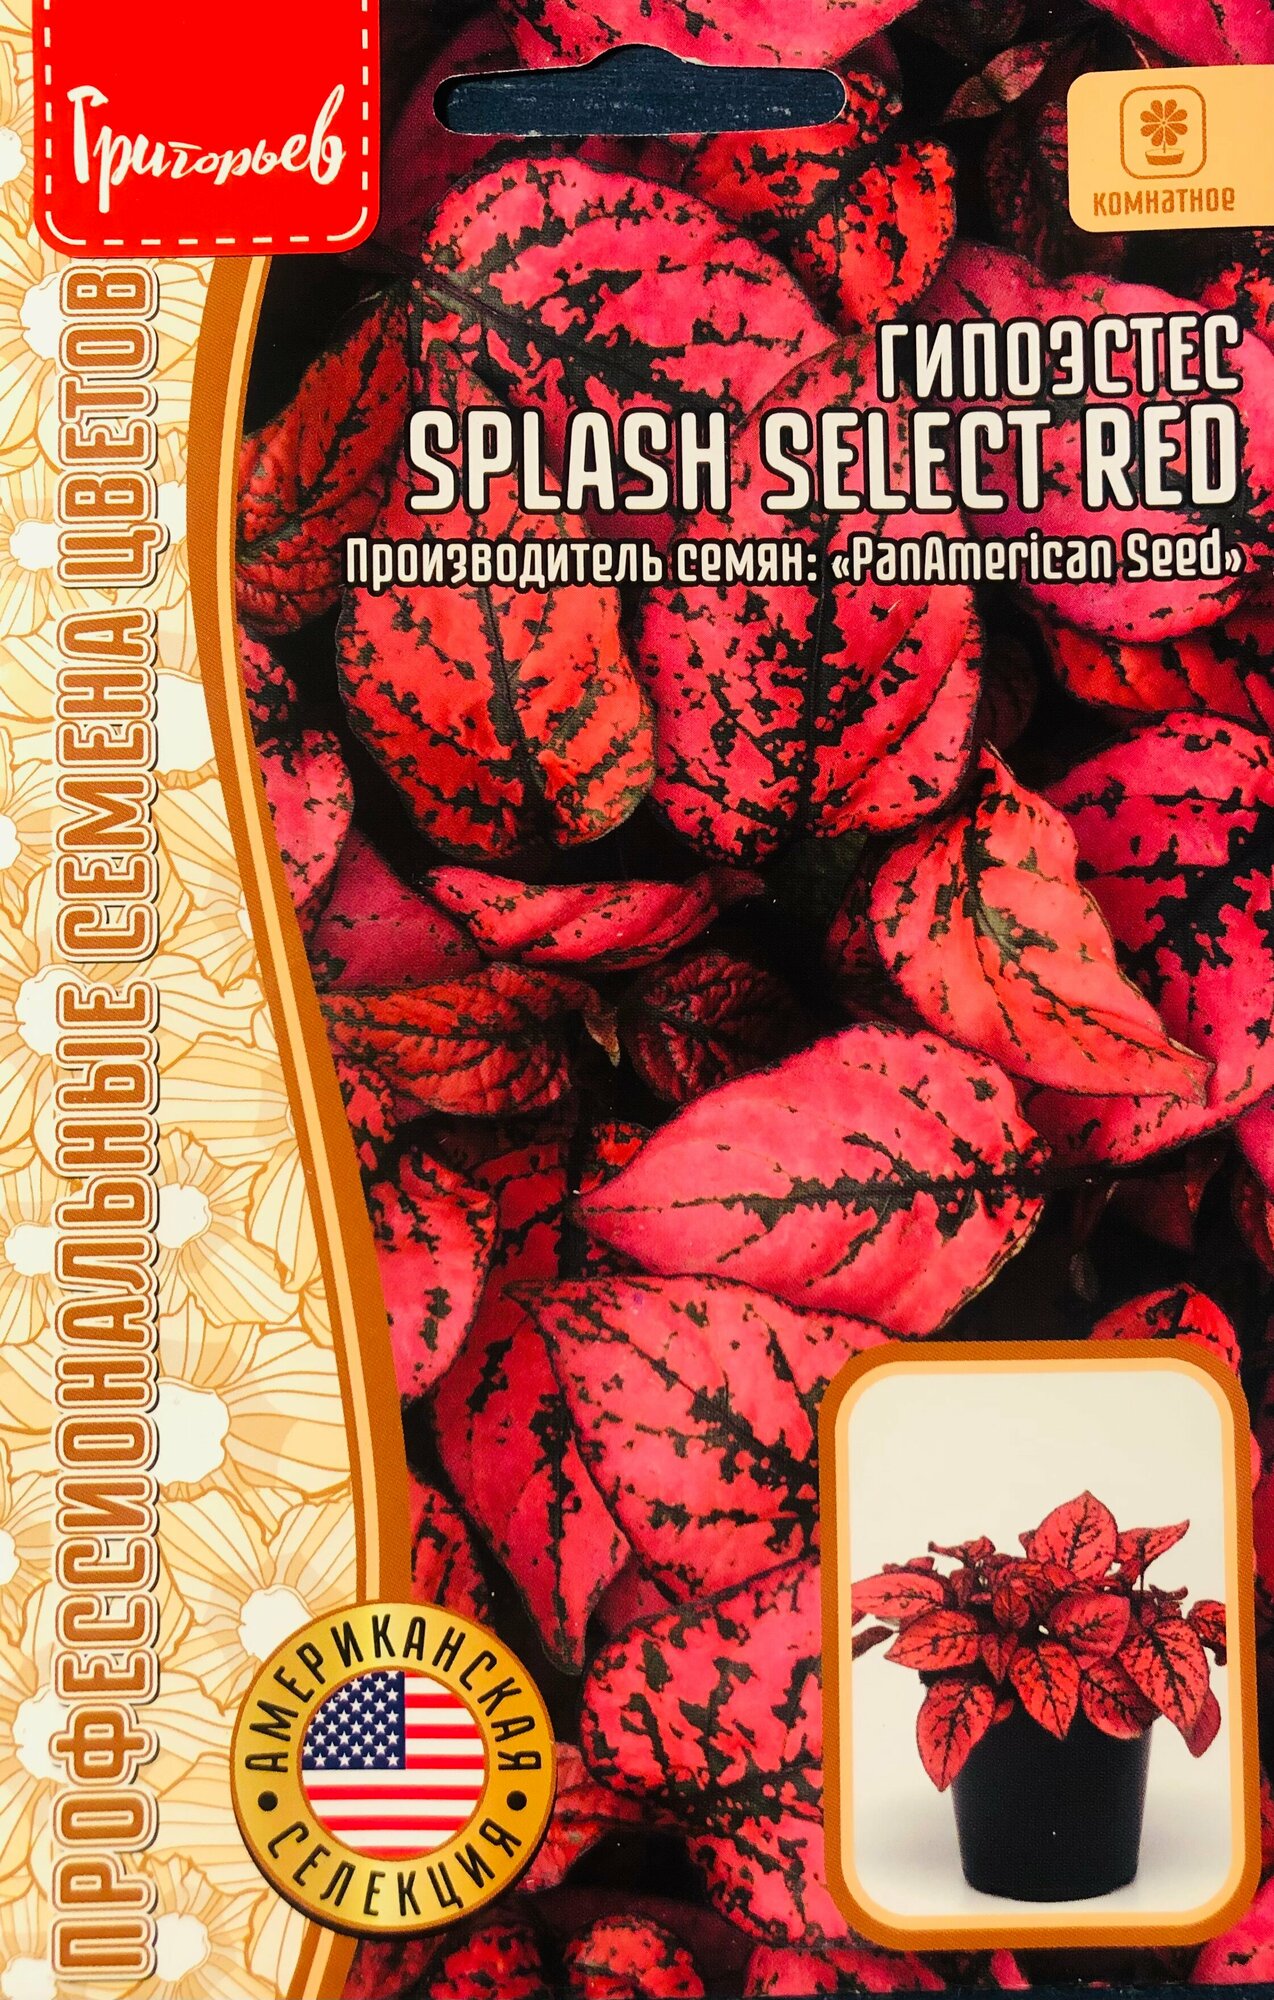 Семена Гипоэстеса "Splash Select Red" (4 сем.)